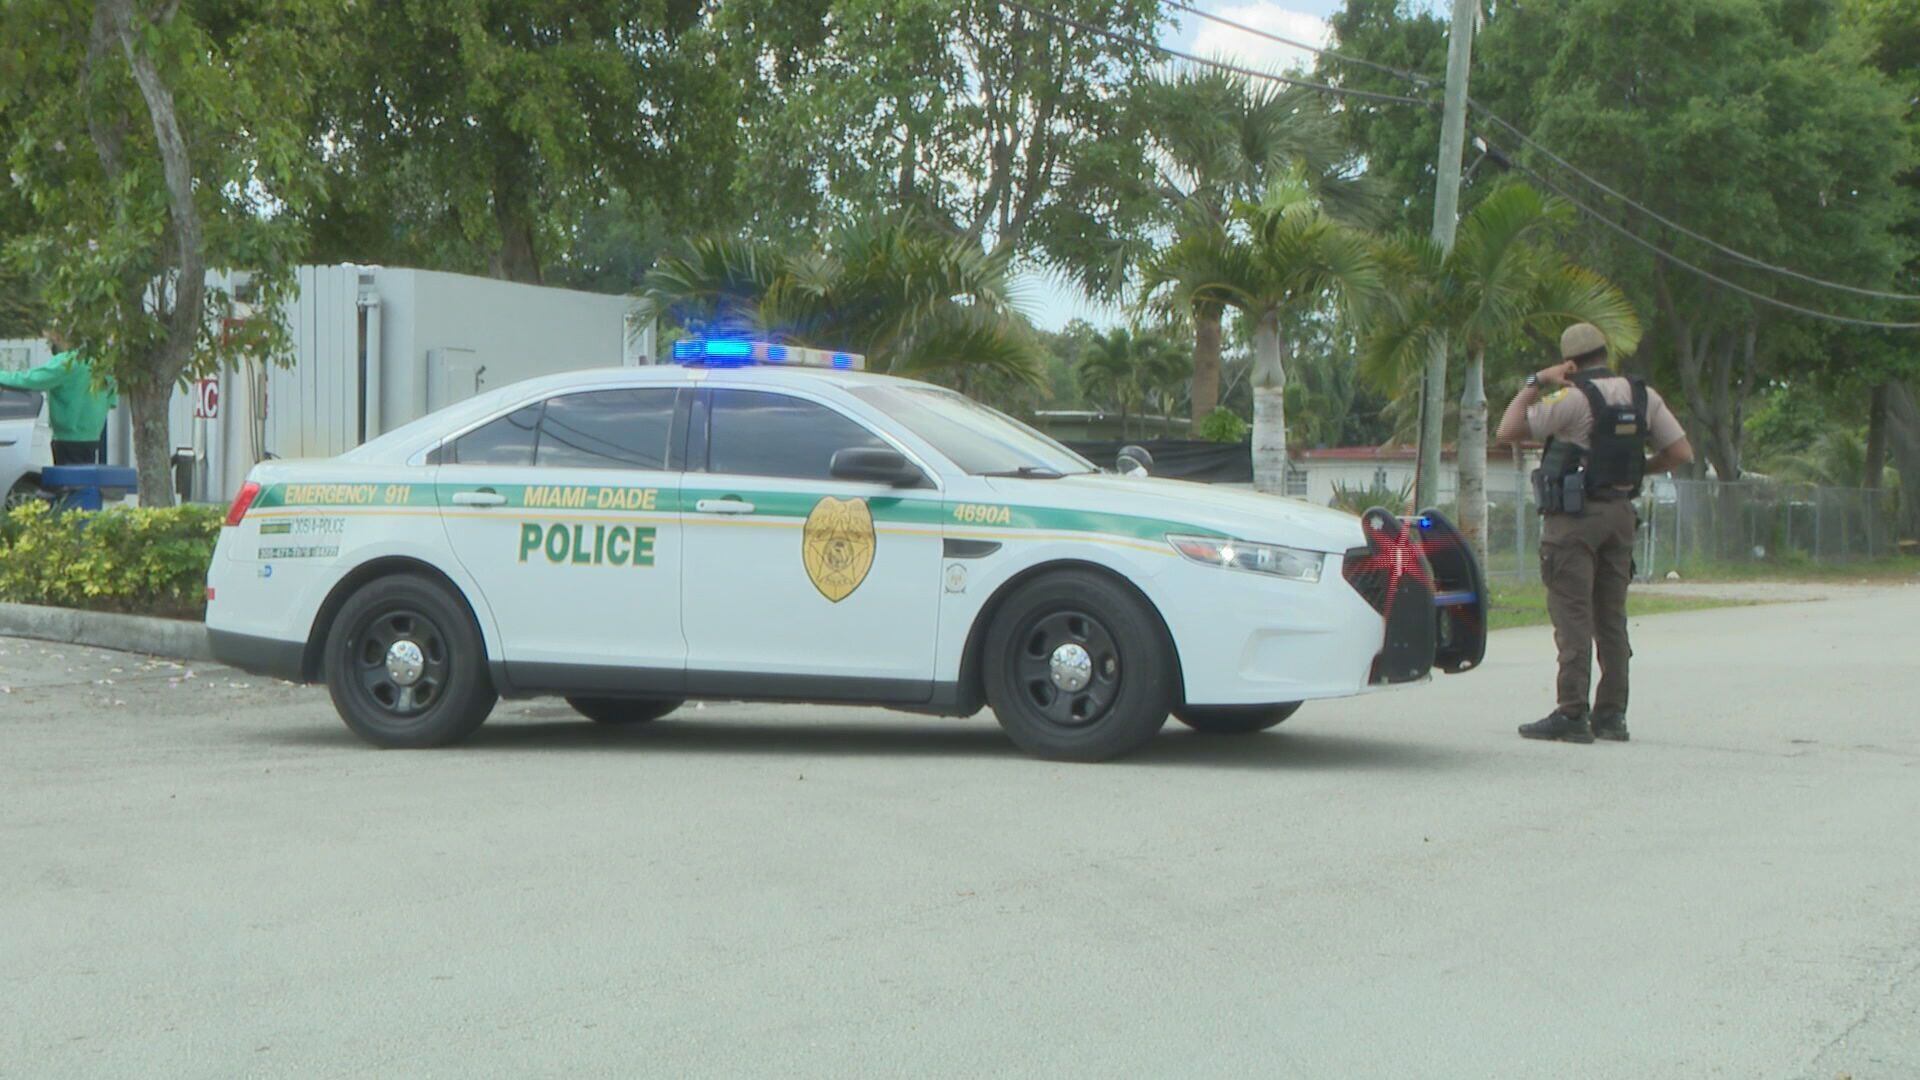 Miami-Dade police perimeter